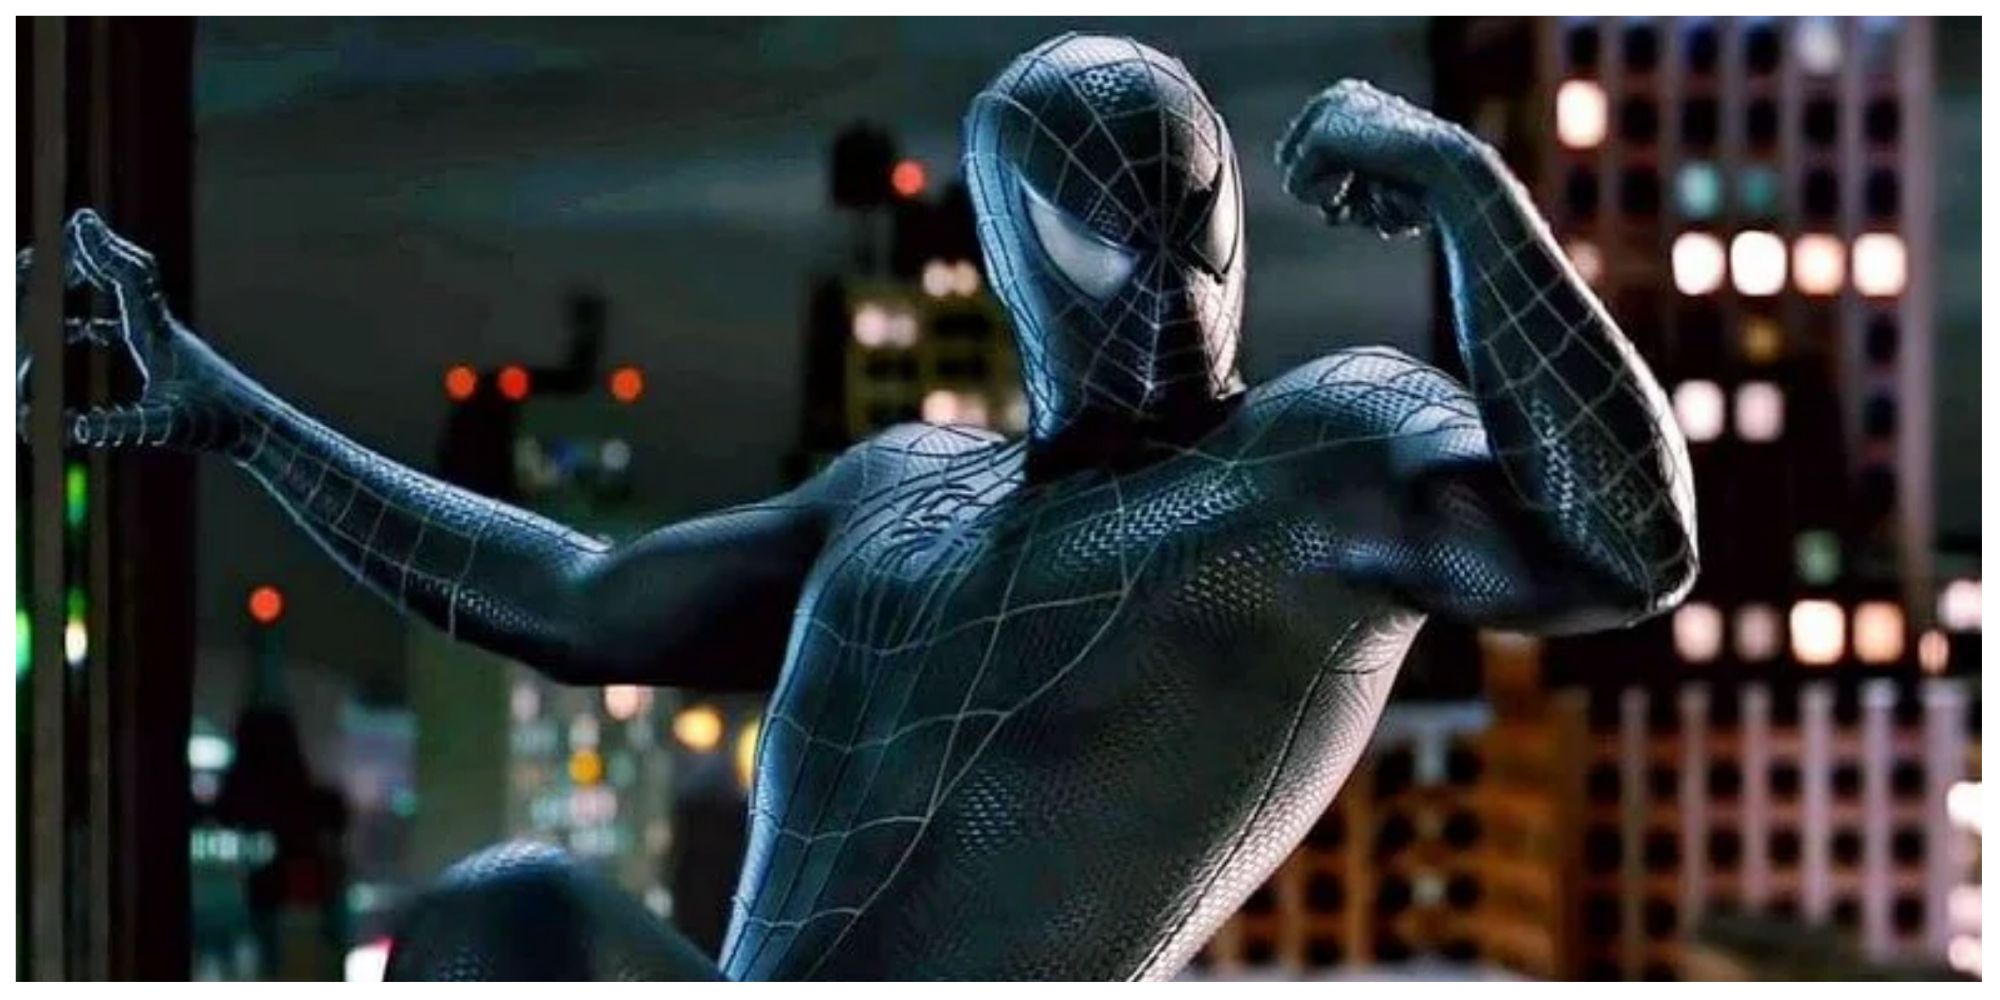 Peter's Black Suit in Spider-Man 3 (2007)